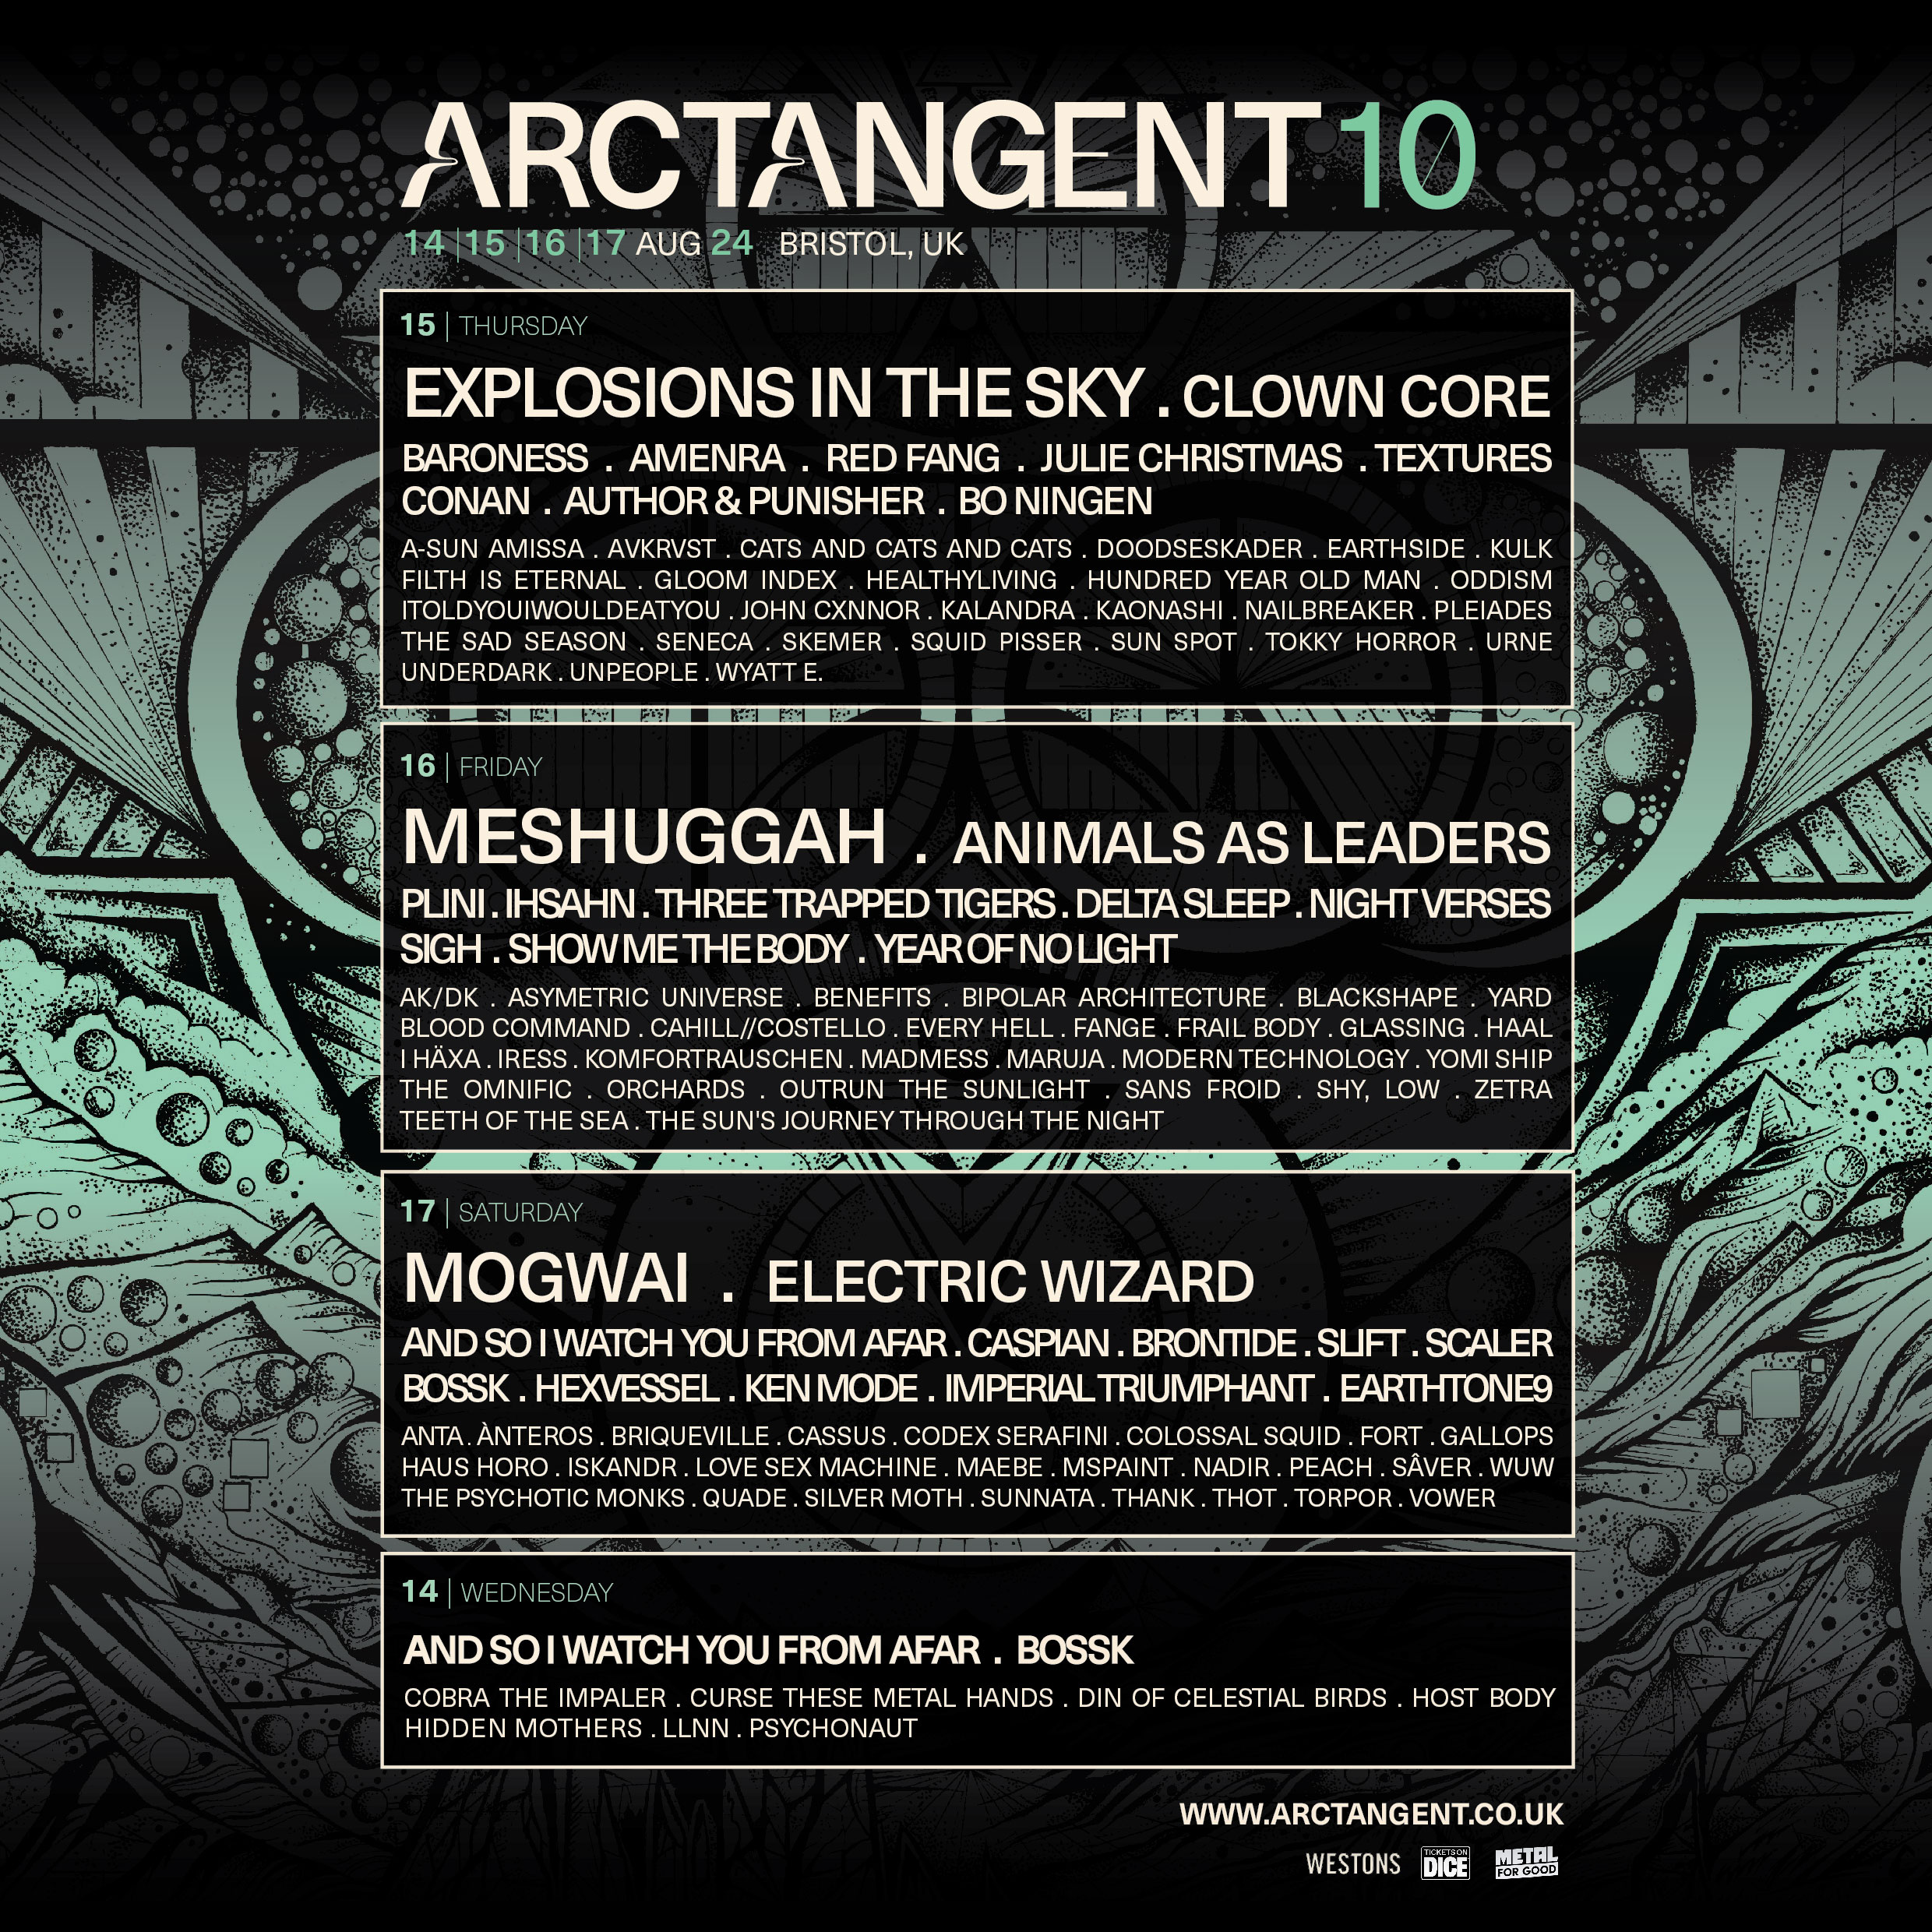 NEW SHOW: ArcTanGent Festival | Aug 15